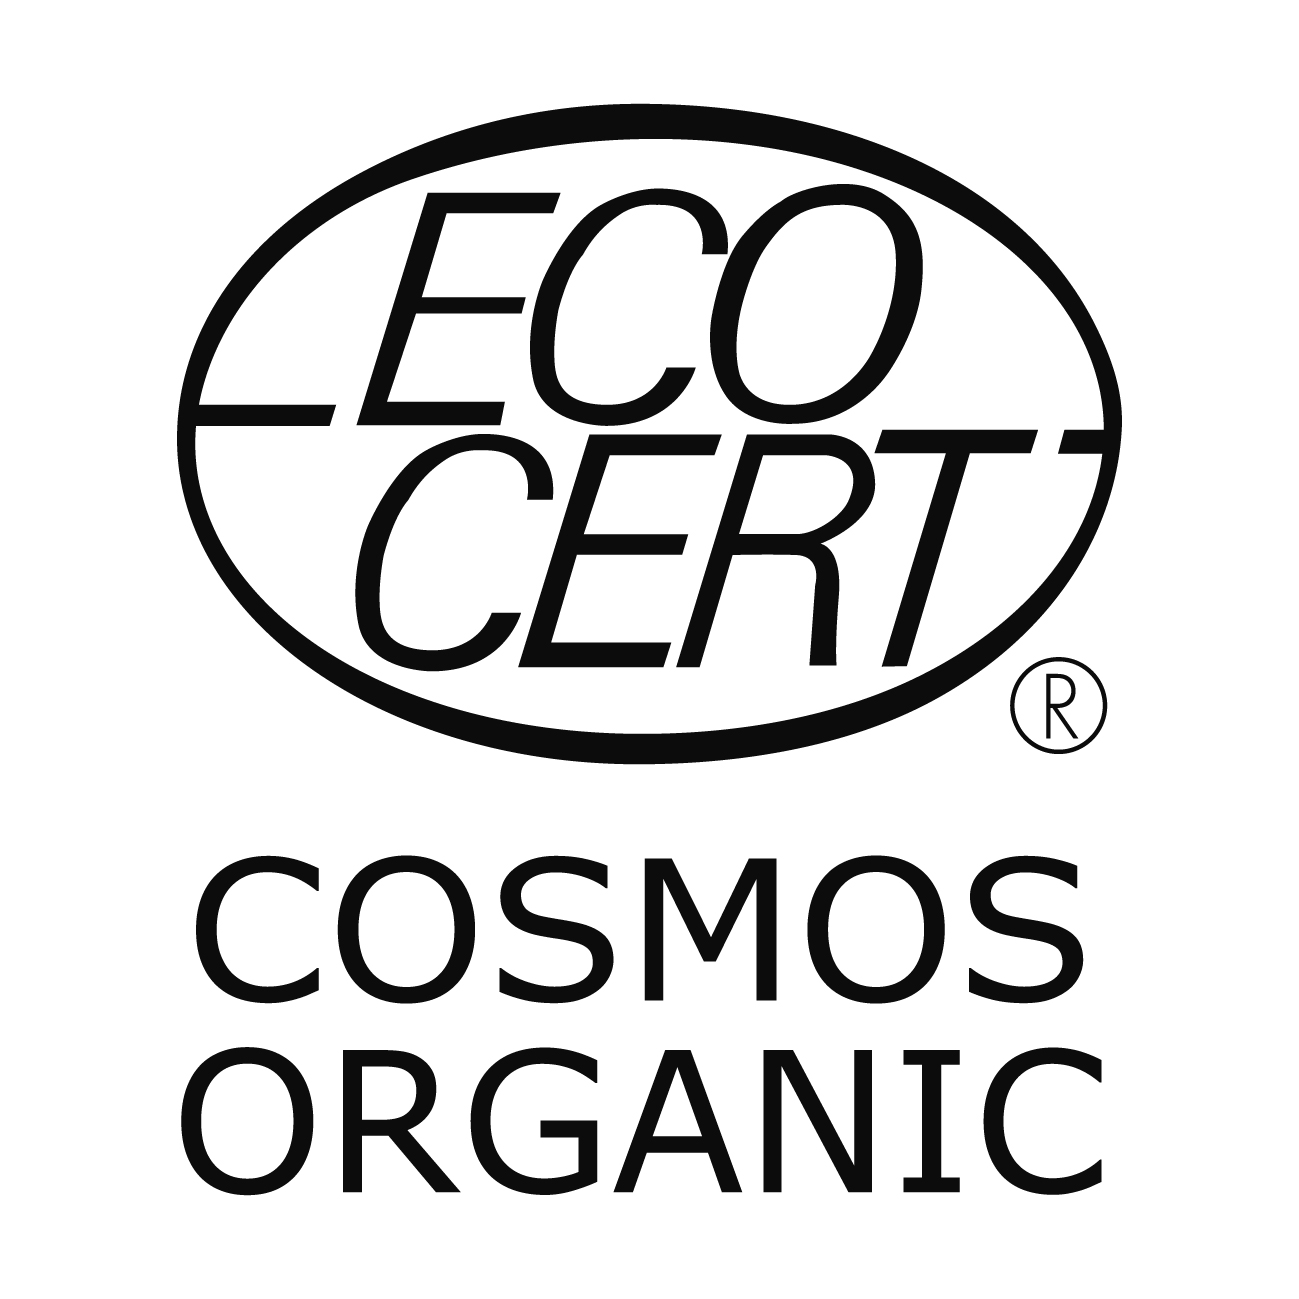 Certifikát_cosmos organic